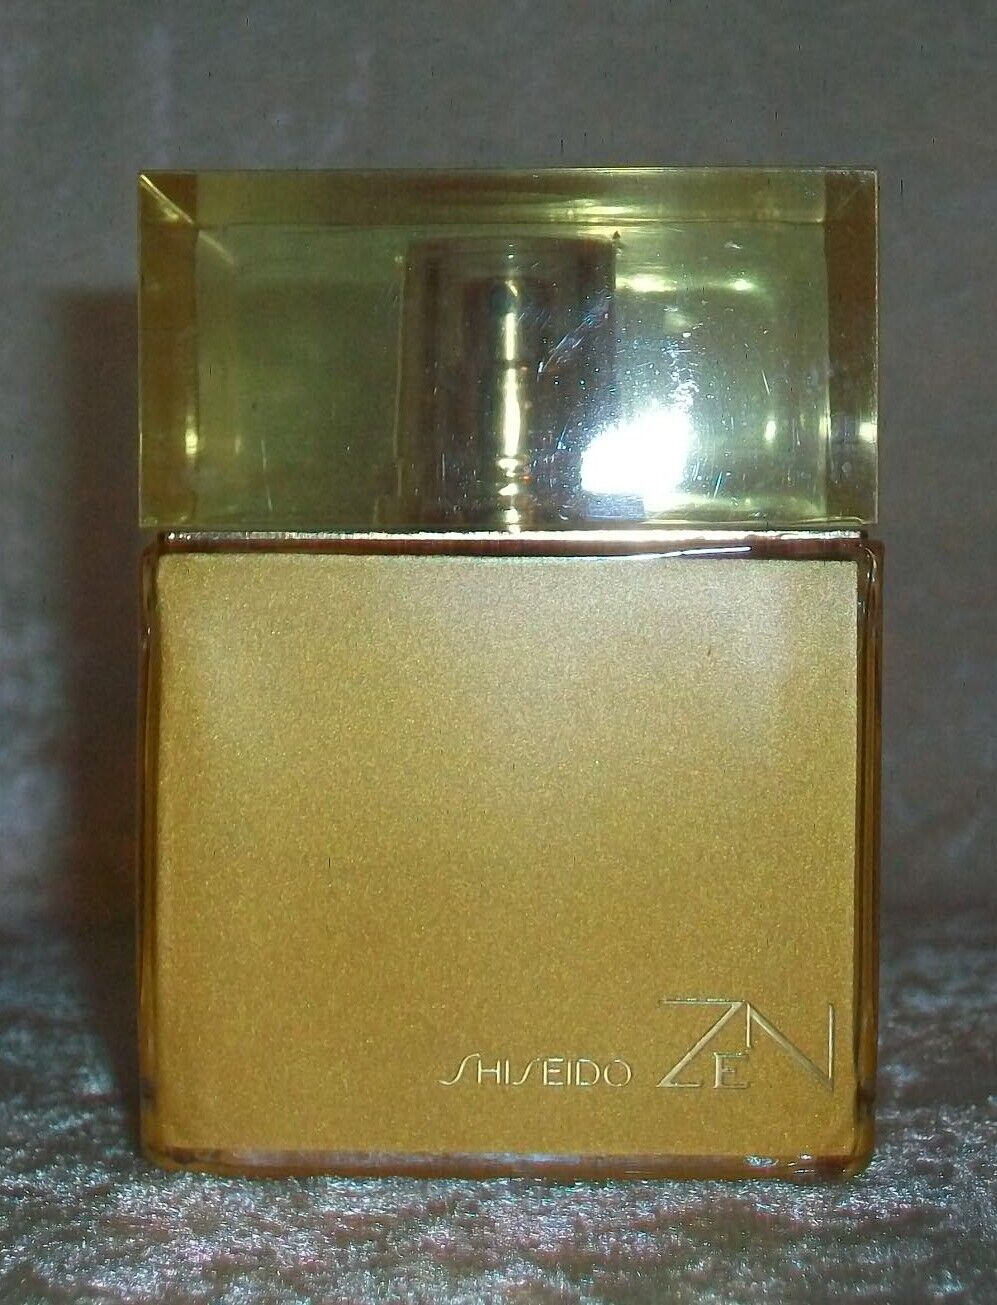 Vintage Shiseido Zen EDP Eau de Parfum Floral Woody Musk Spray Perfume 1/3 Full